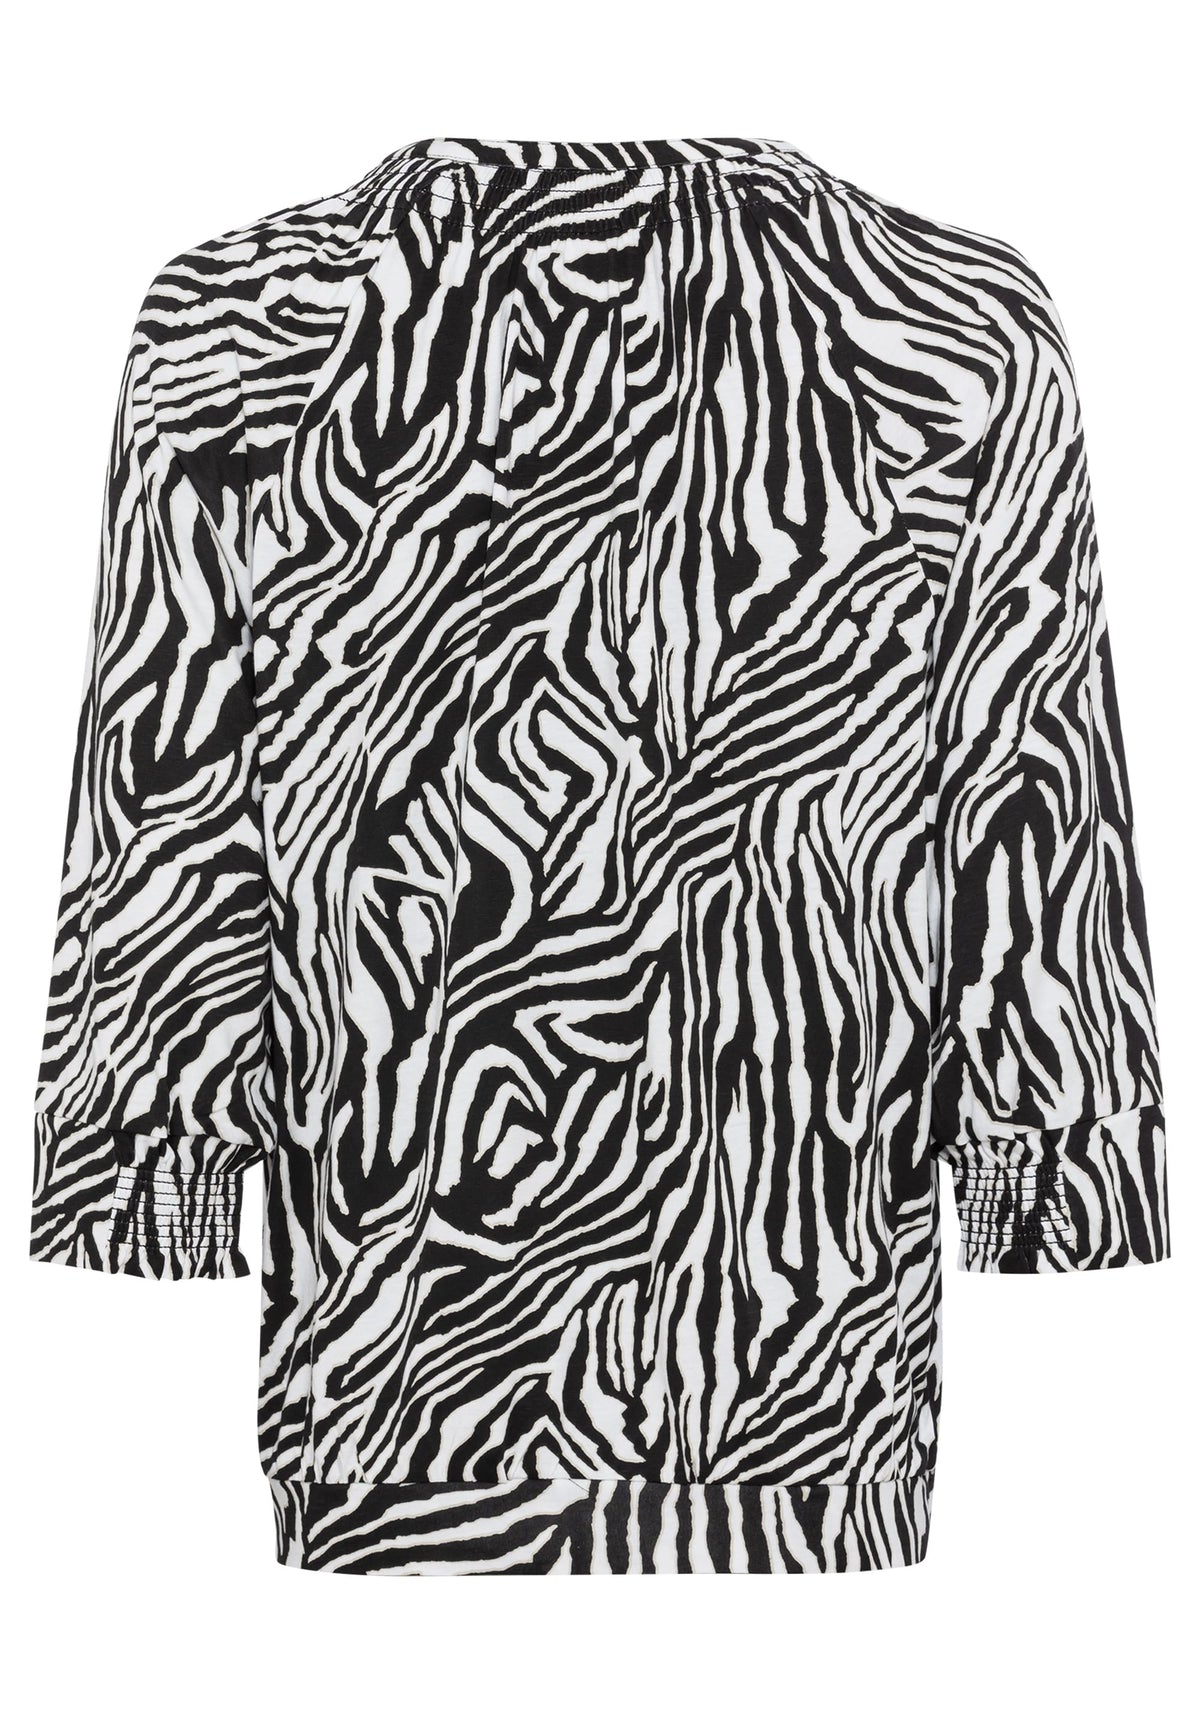 Cotton Blend 3/4 Sleeve Zebra Print Tie-Neck T-Shirt containing TENCEL™ Modal